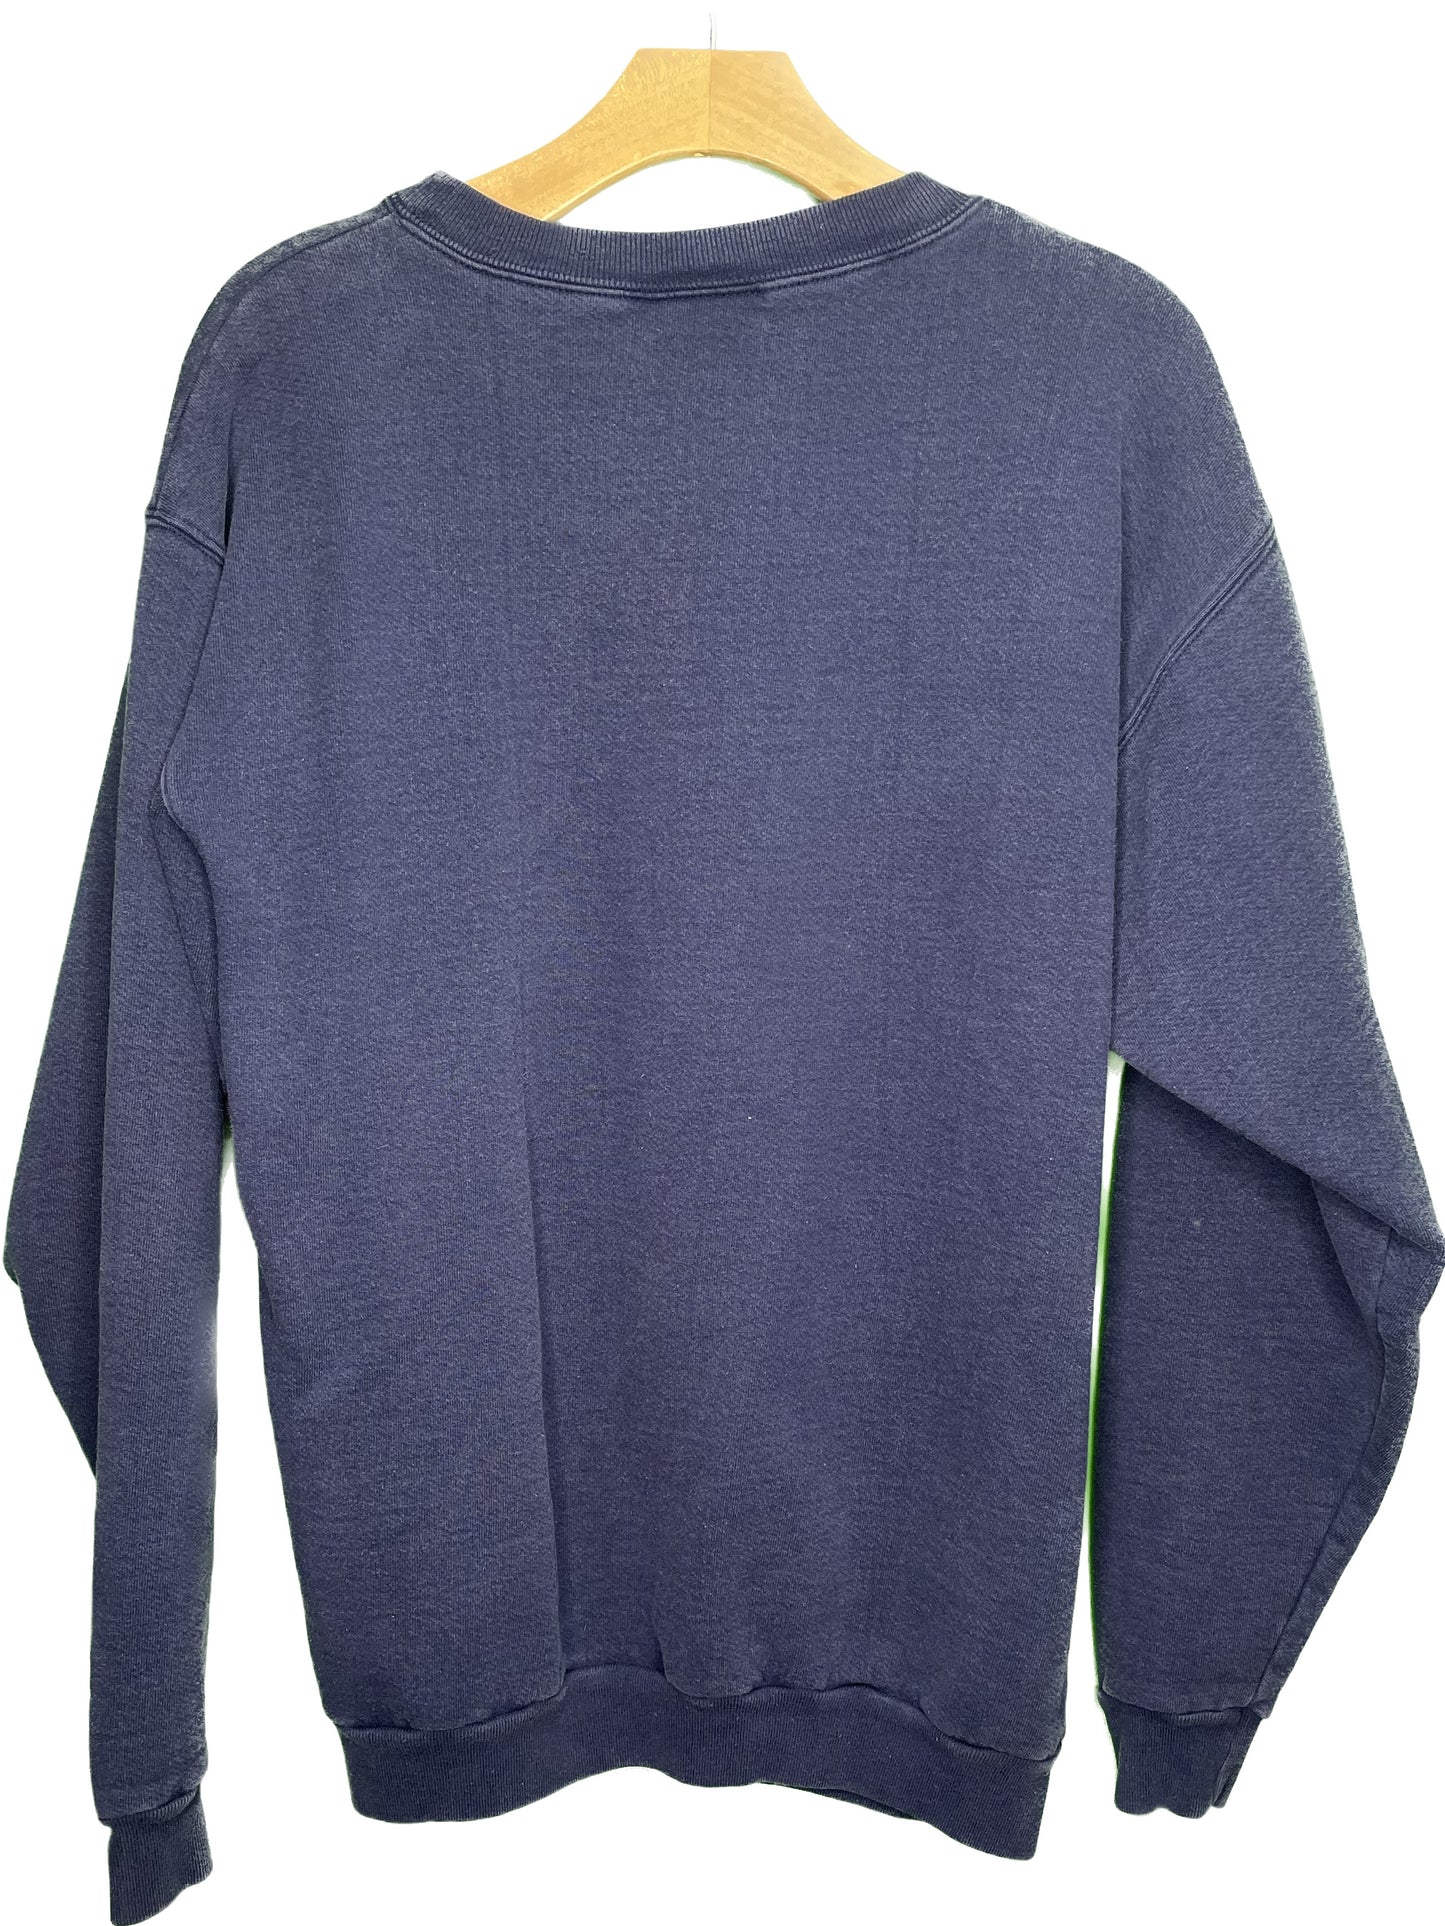 Vintage L/XL University of Notre Dame Irish Embroidered Sweatshirt